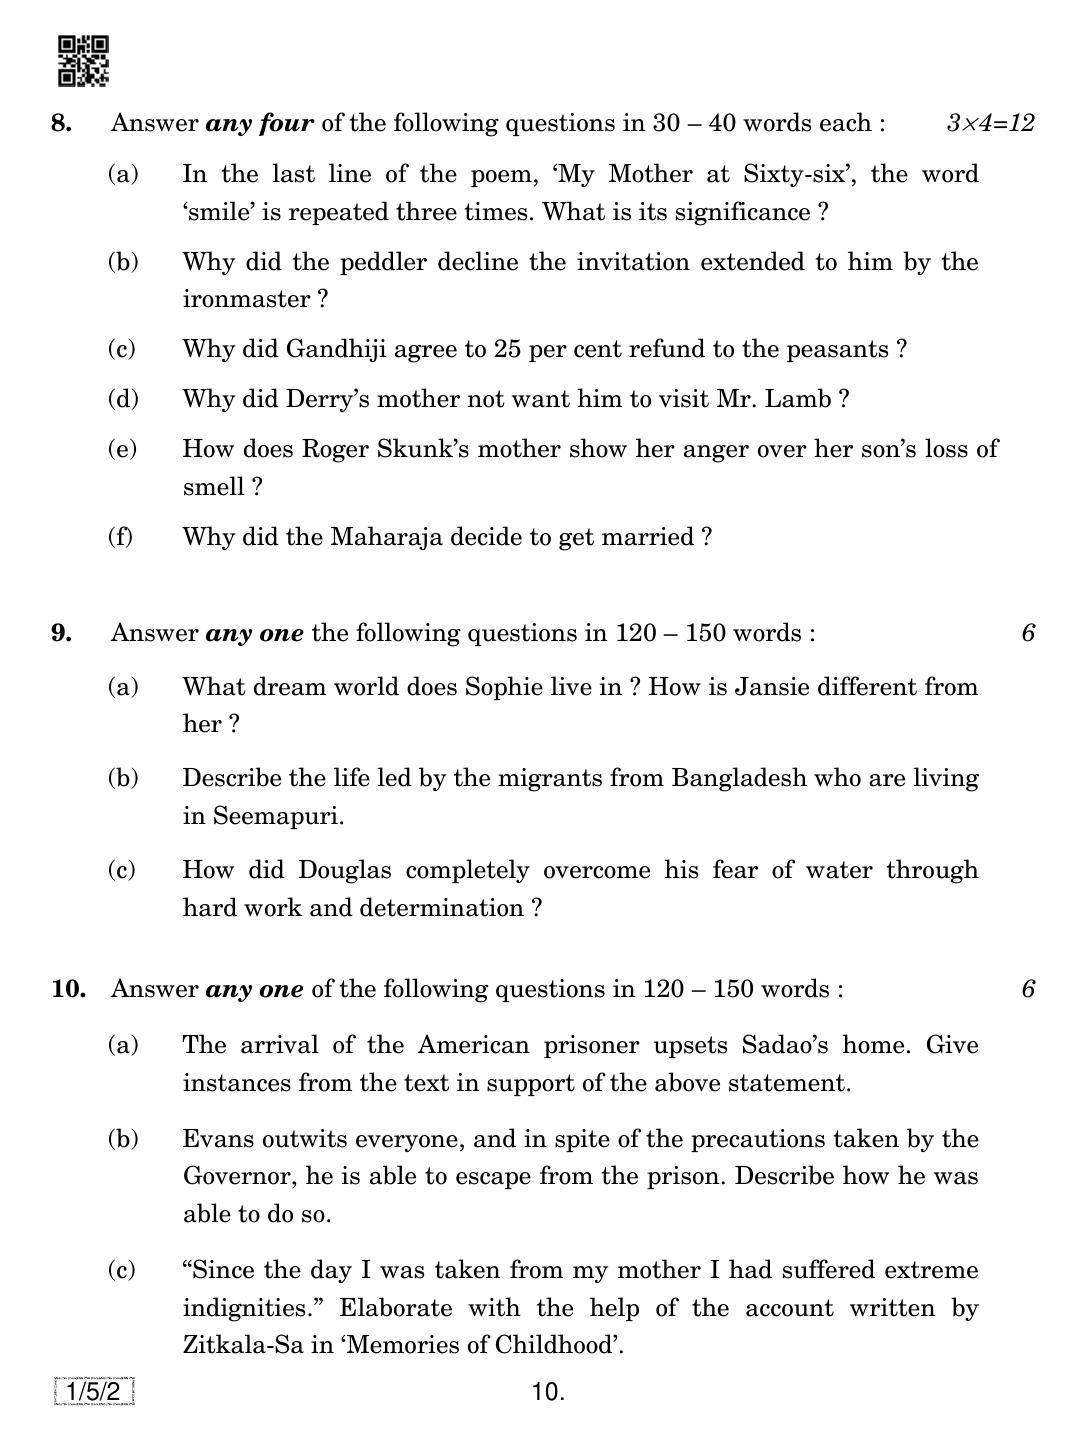 CBSE Class 12 1-5-2 English Core 2019 Question Paper - Page 10